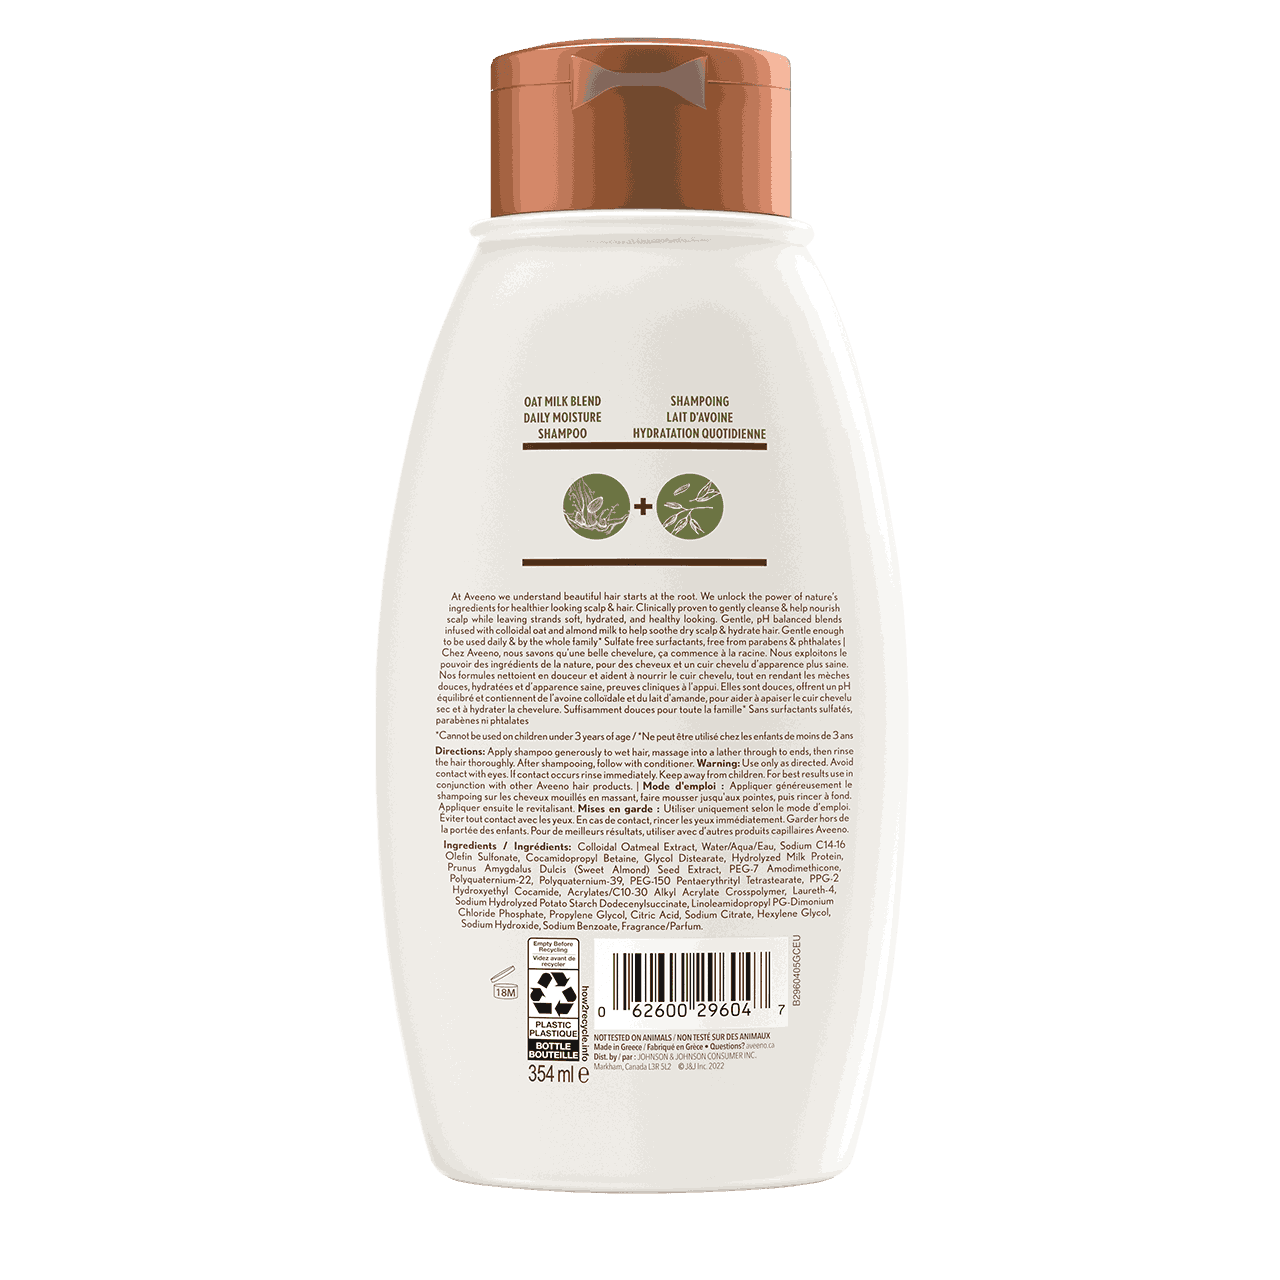 AVEENO® Oatmilk Blend Shampoo Daily Moisture, 354ml bottle, back label